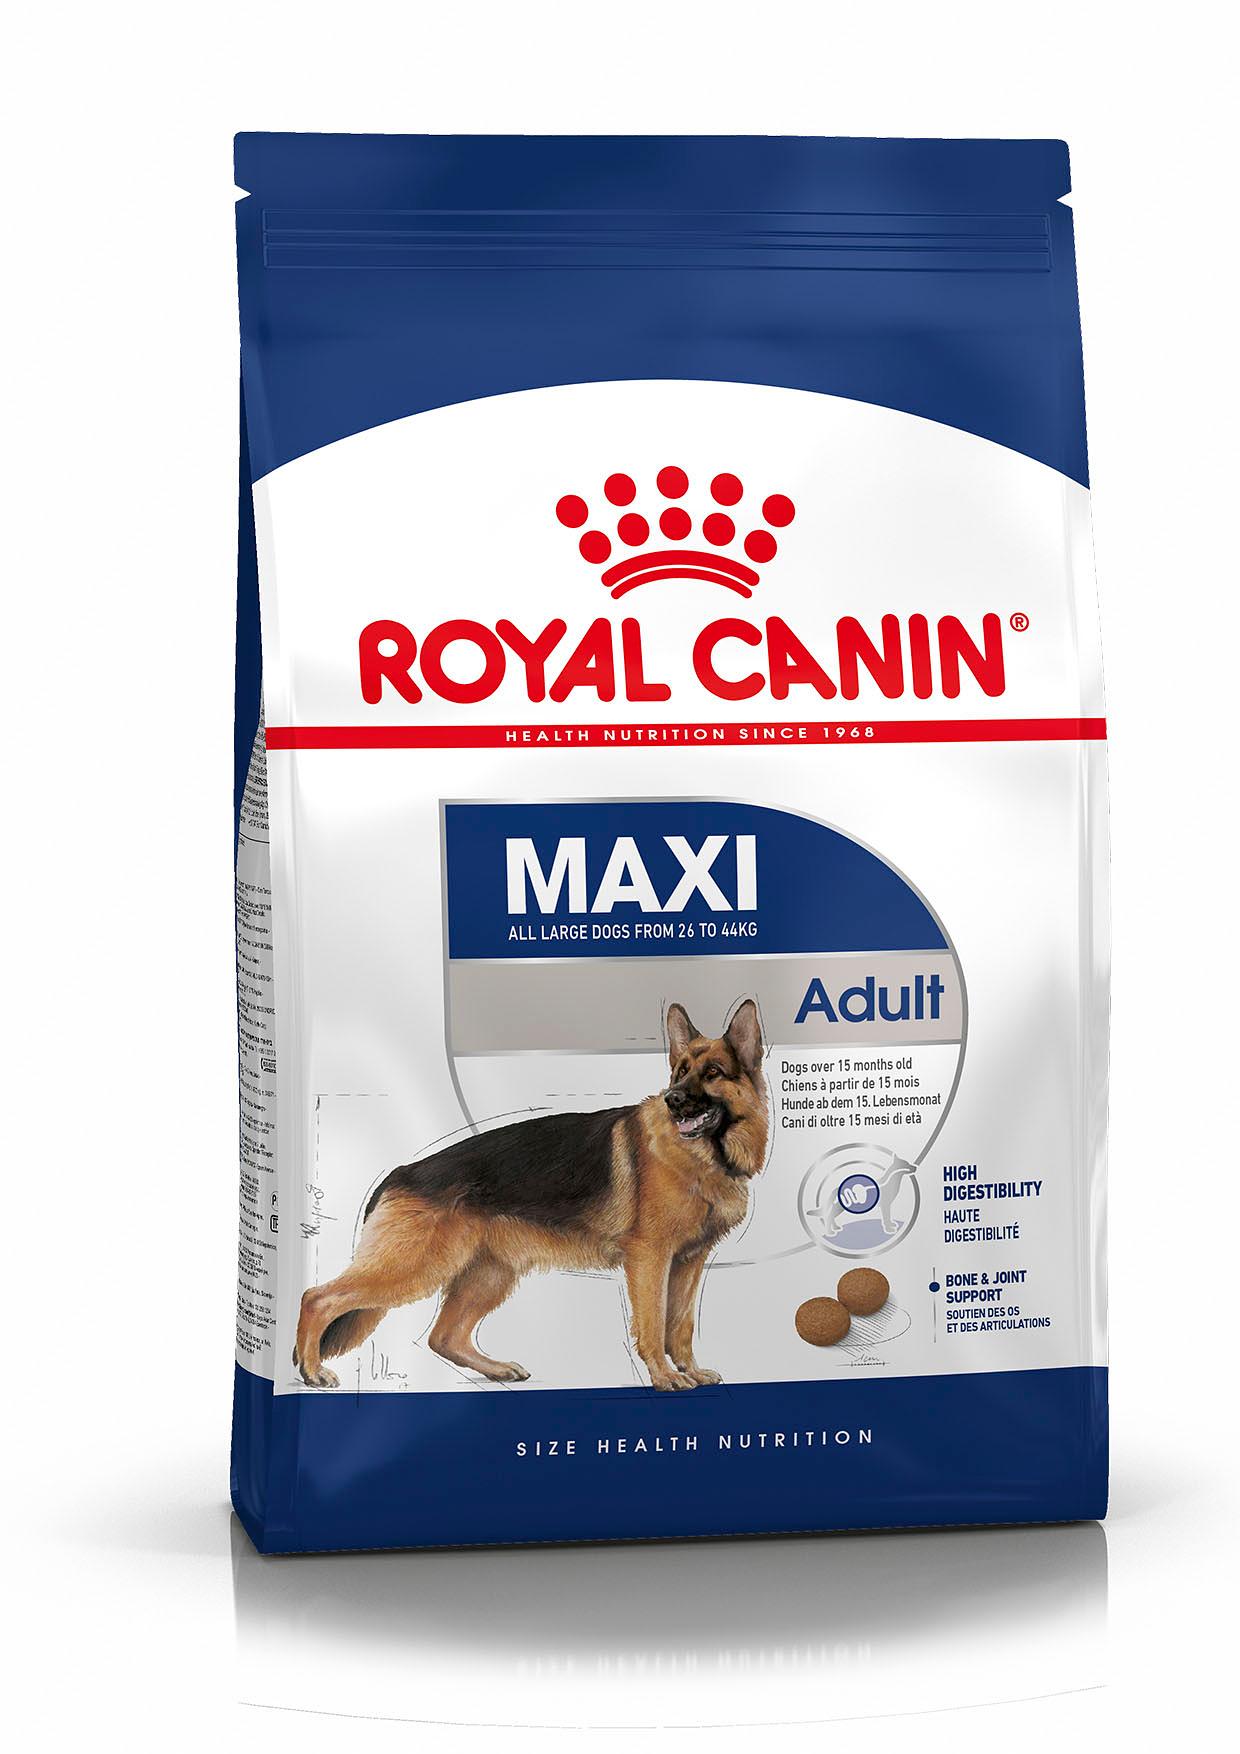 Royal Canin – Maxi Adult